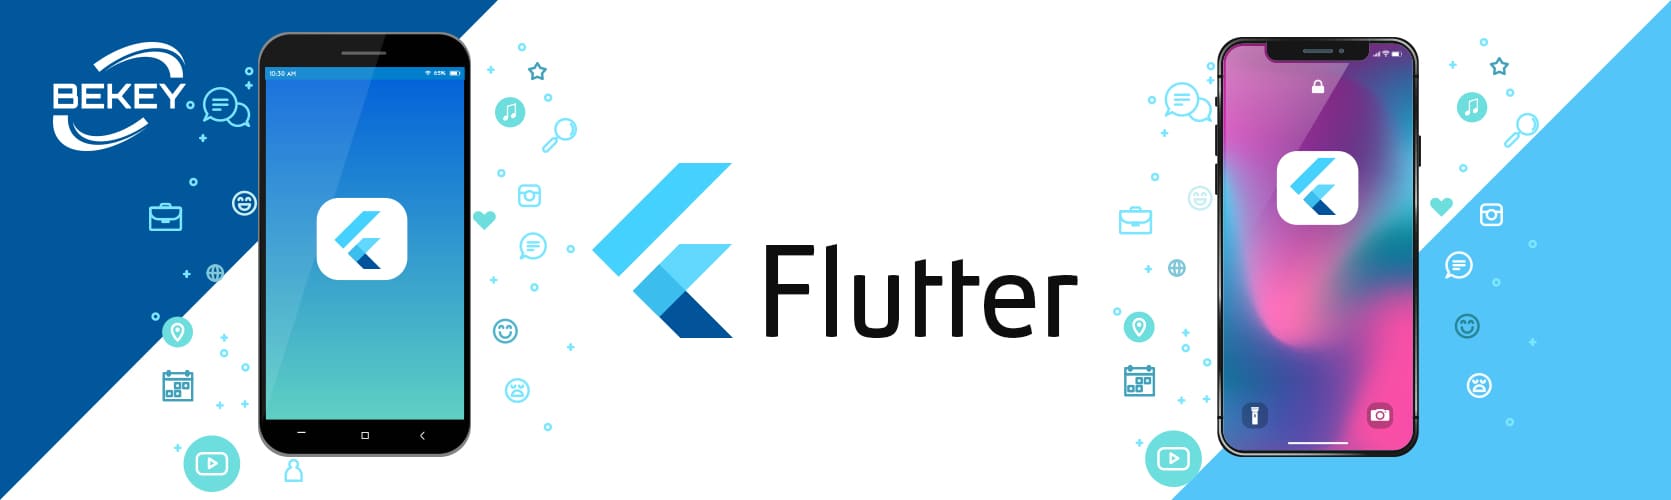 How Flutter is solving cross-platform app development challenges 